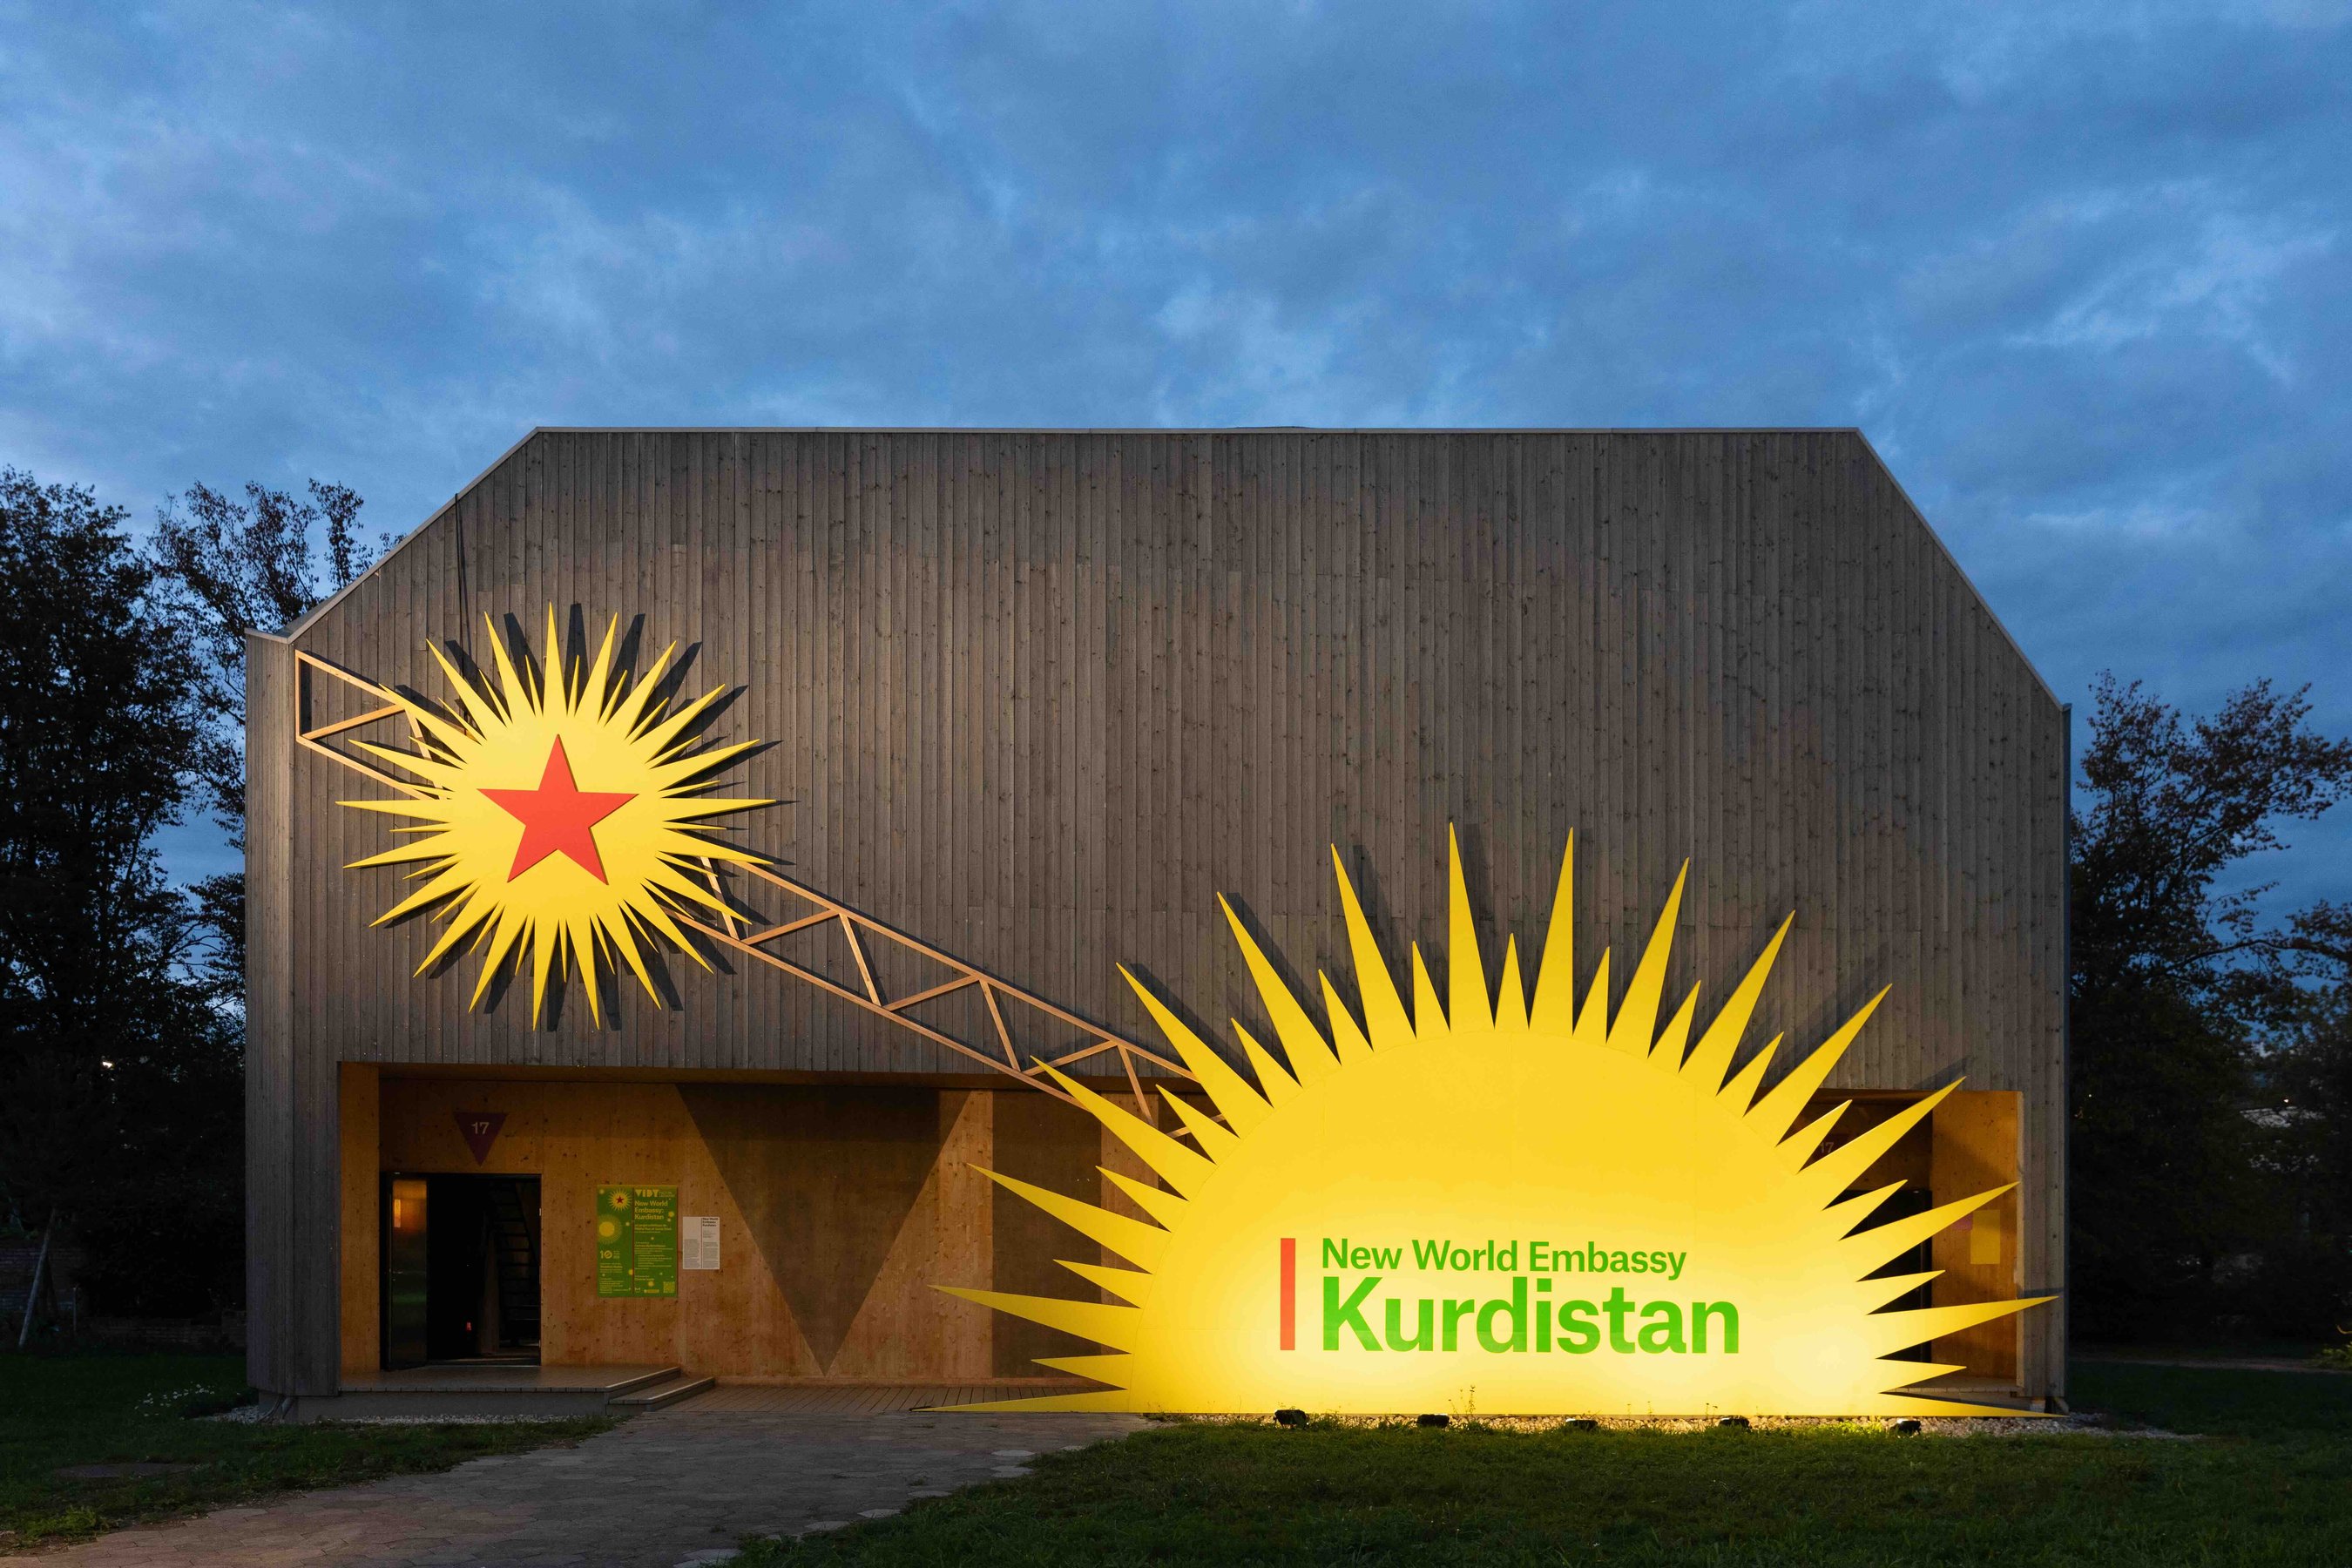 New World Embassy: Kurdistan